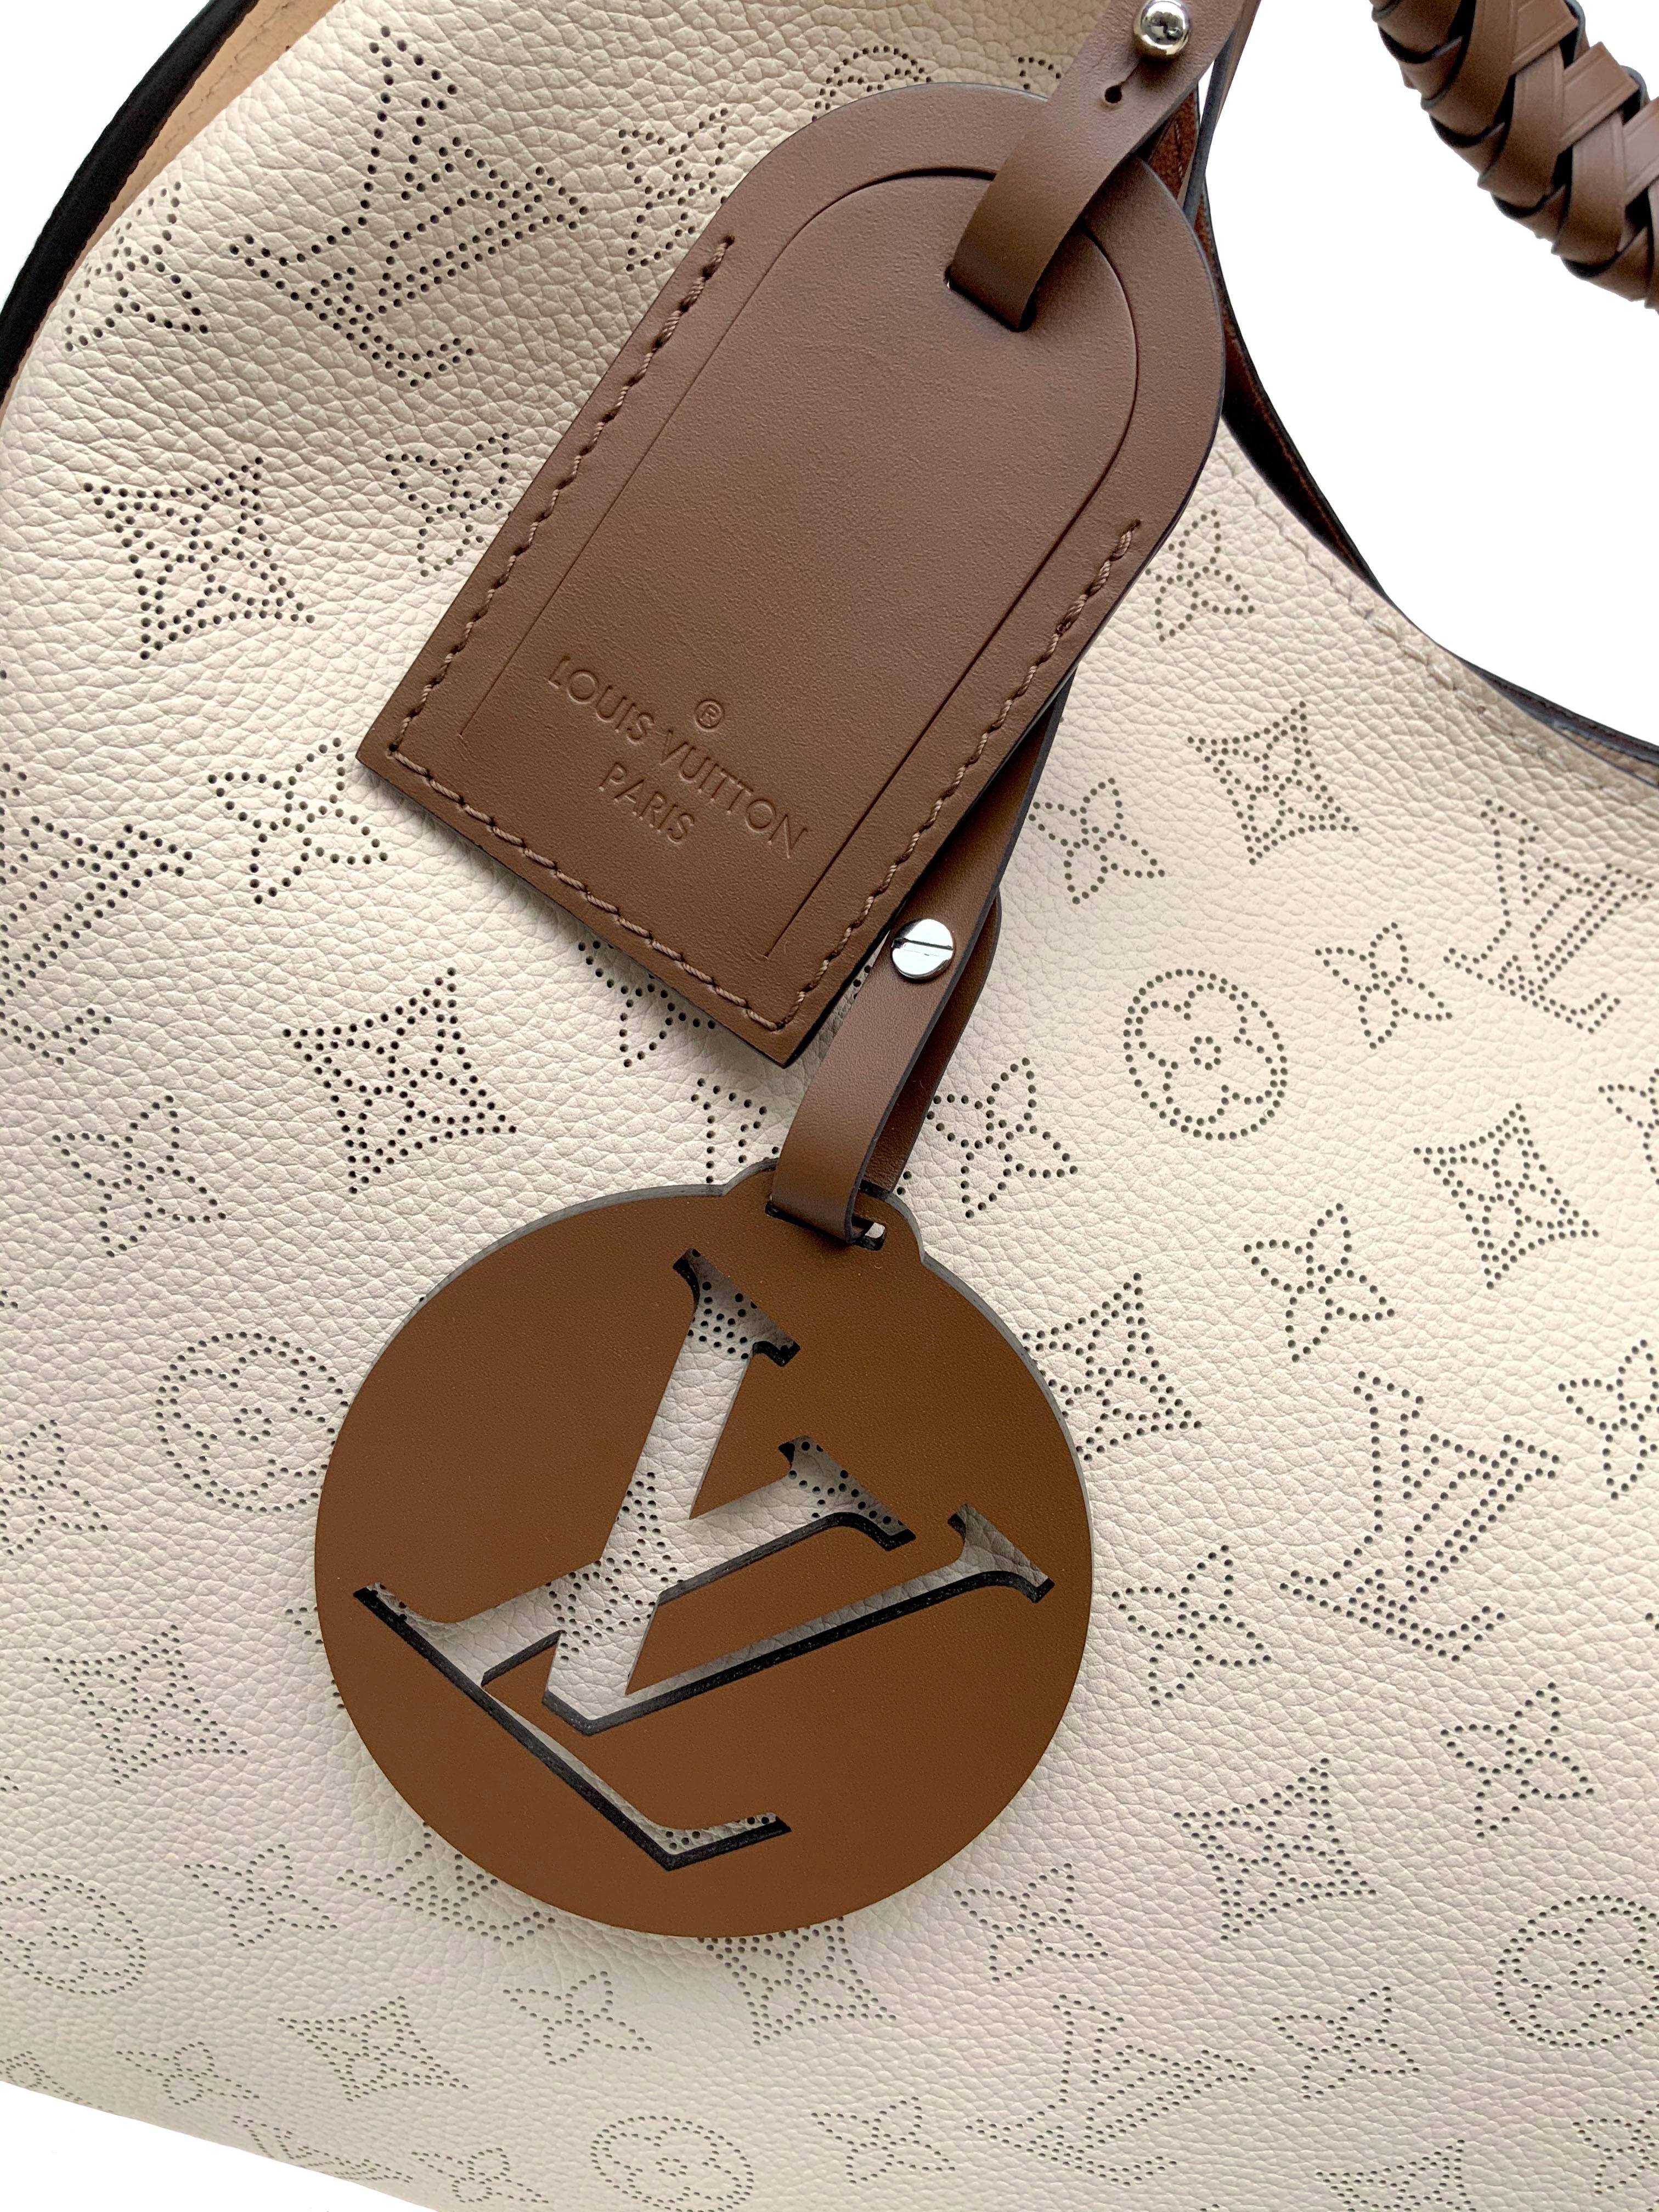 LUXURY* Louis Vuitton Handbag, 'Carmel' in Mahina Leather